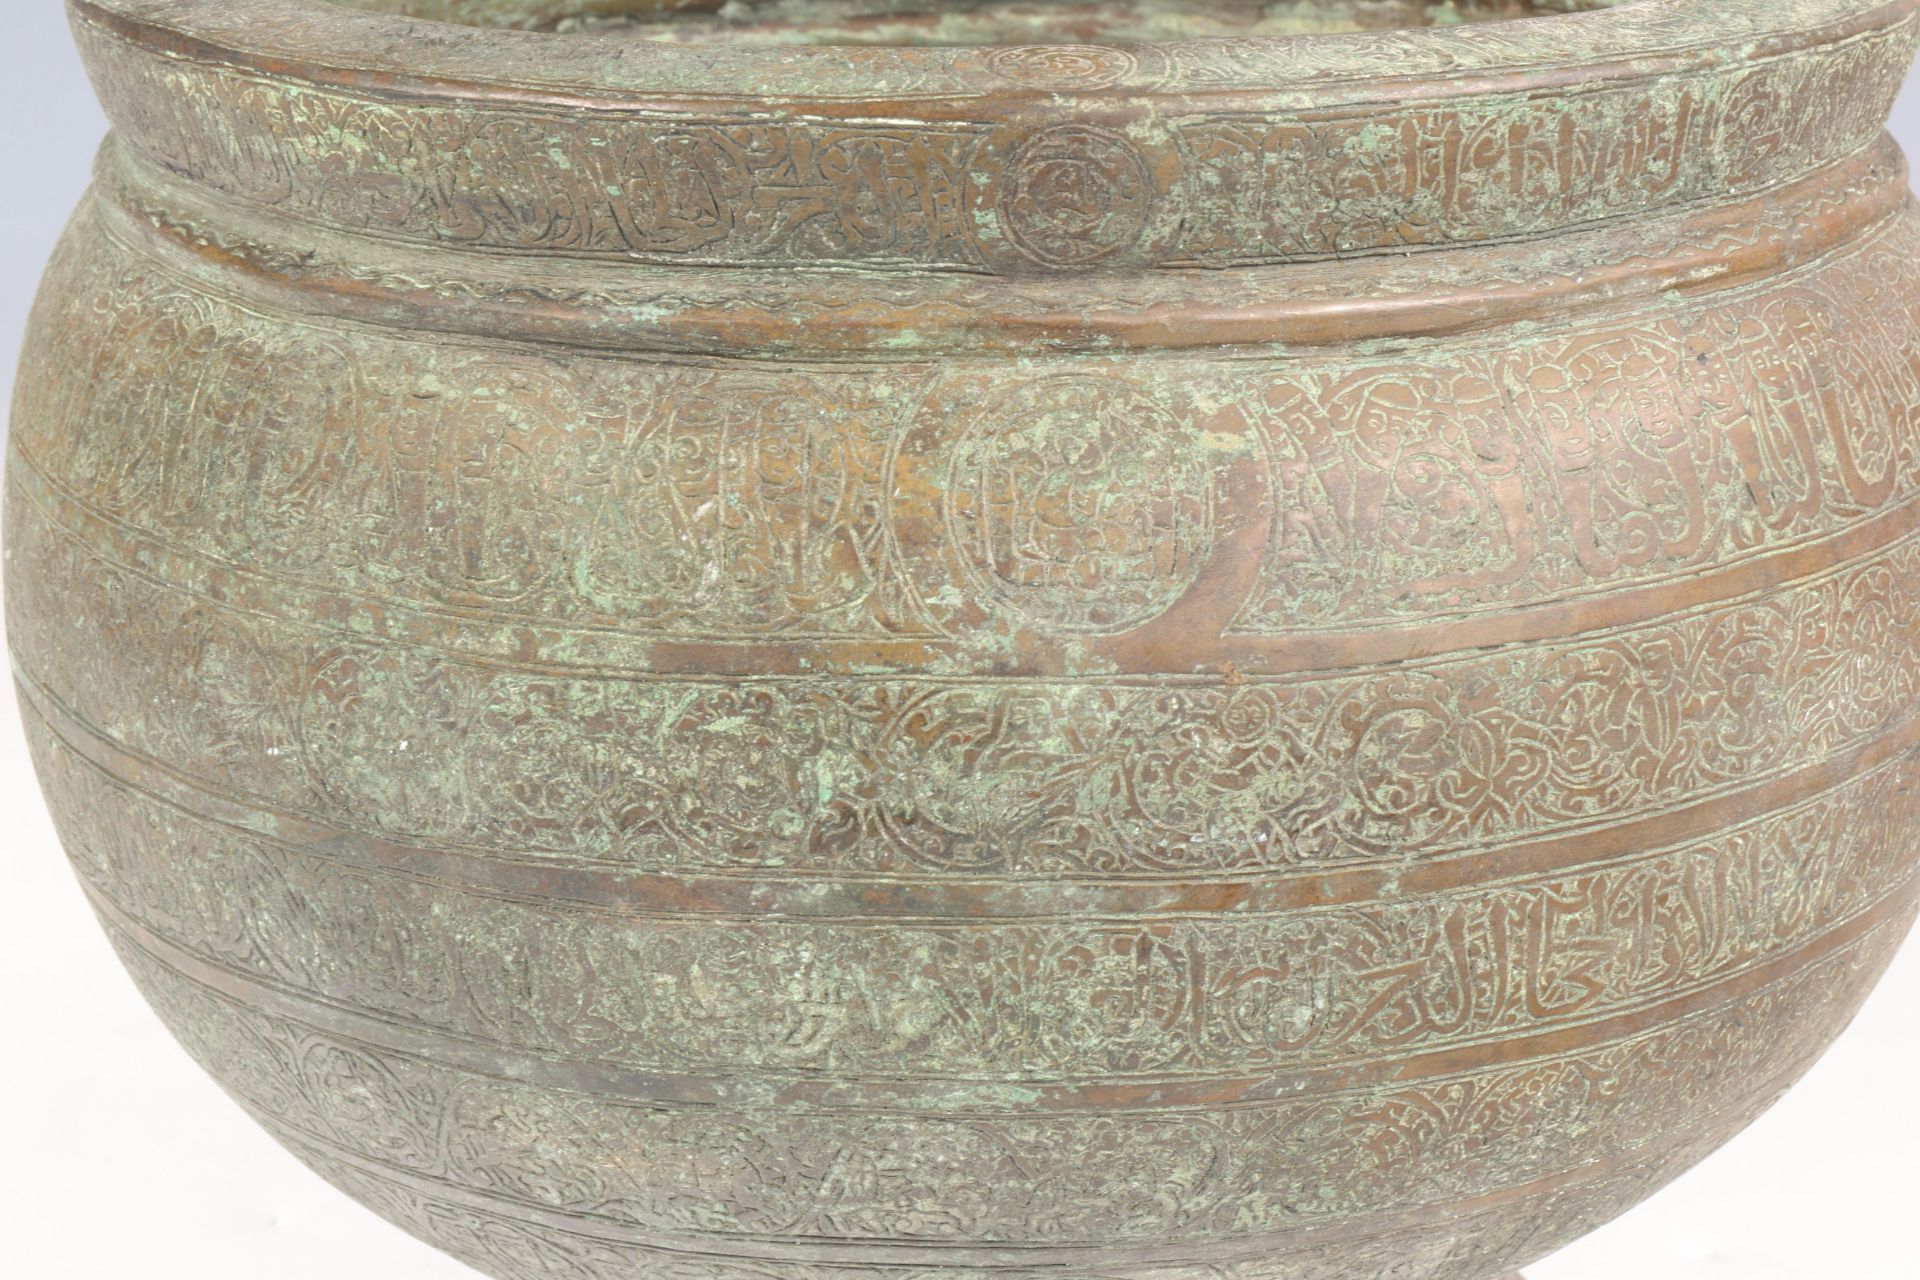 A Persian bronze tripot cauldron, Khorasan, 13th century or later. - Bild 3 aus 4